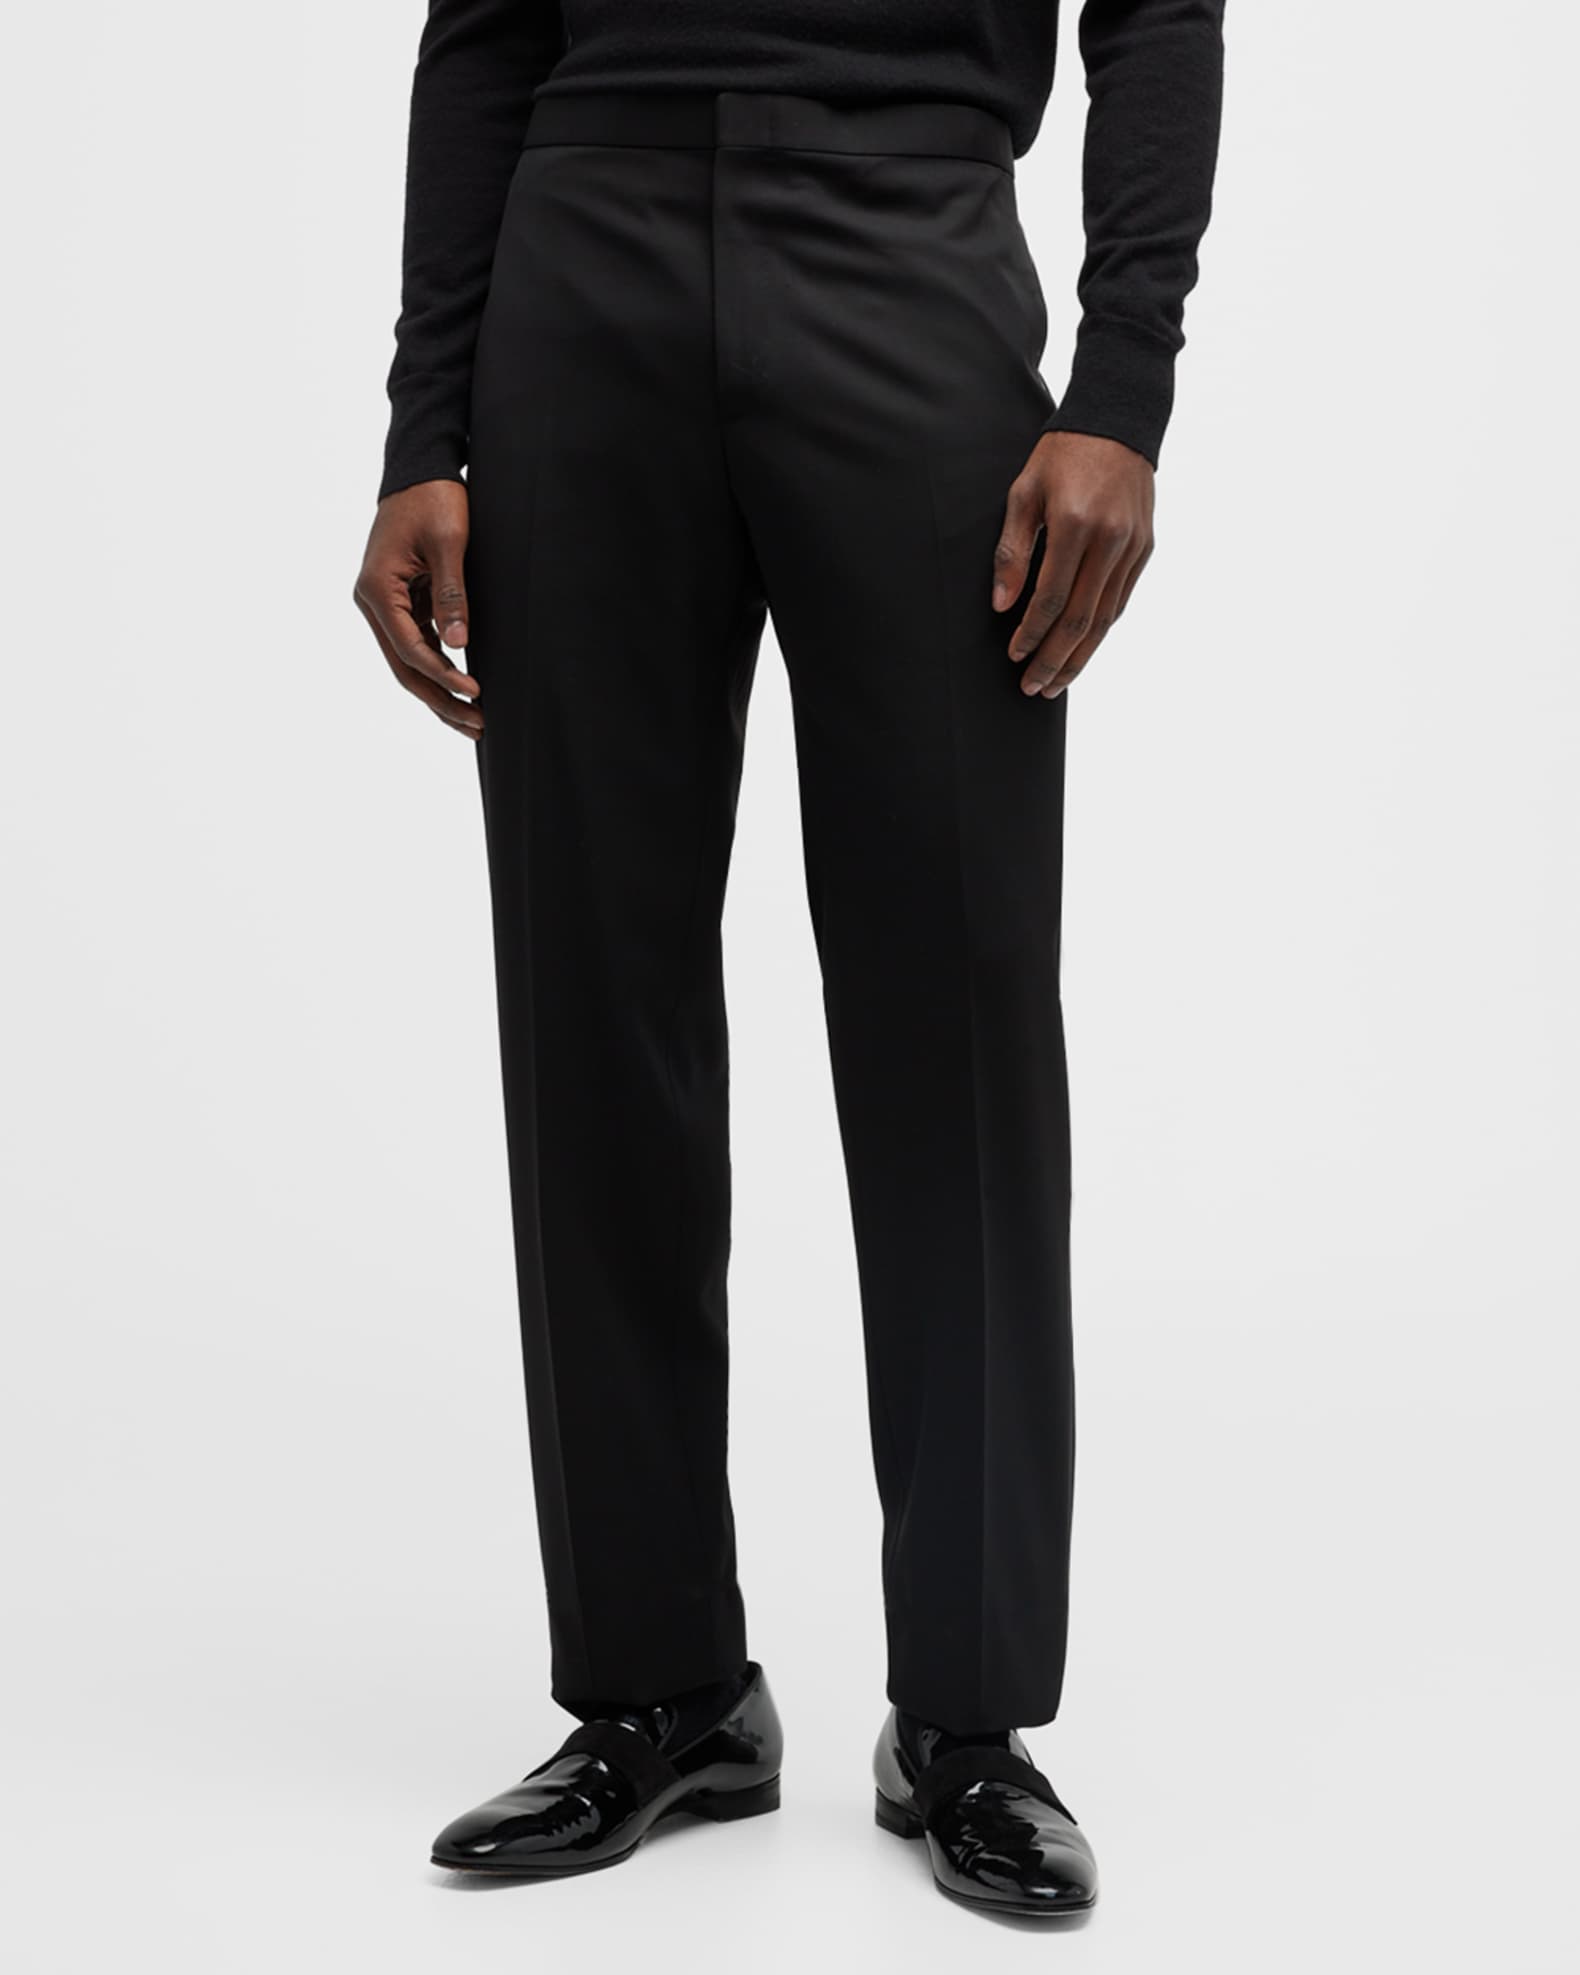 Brioni Men's Solid Formal Trousers | Neiman Marcus